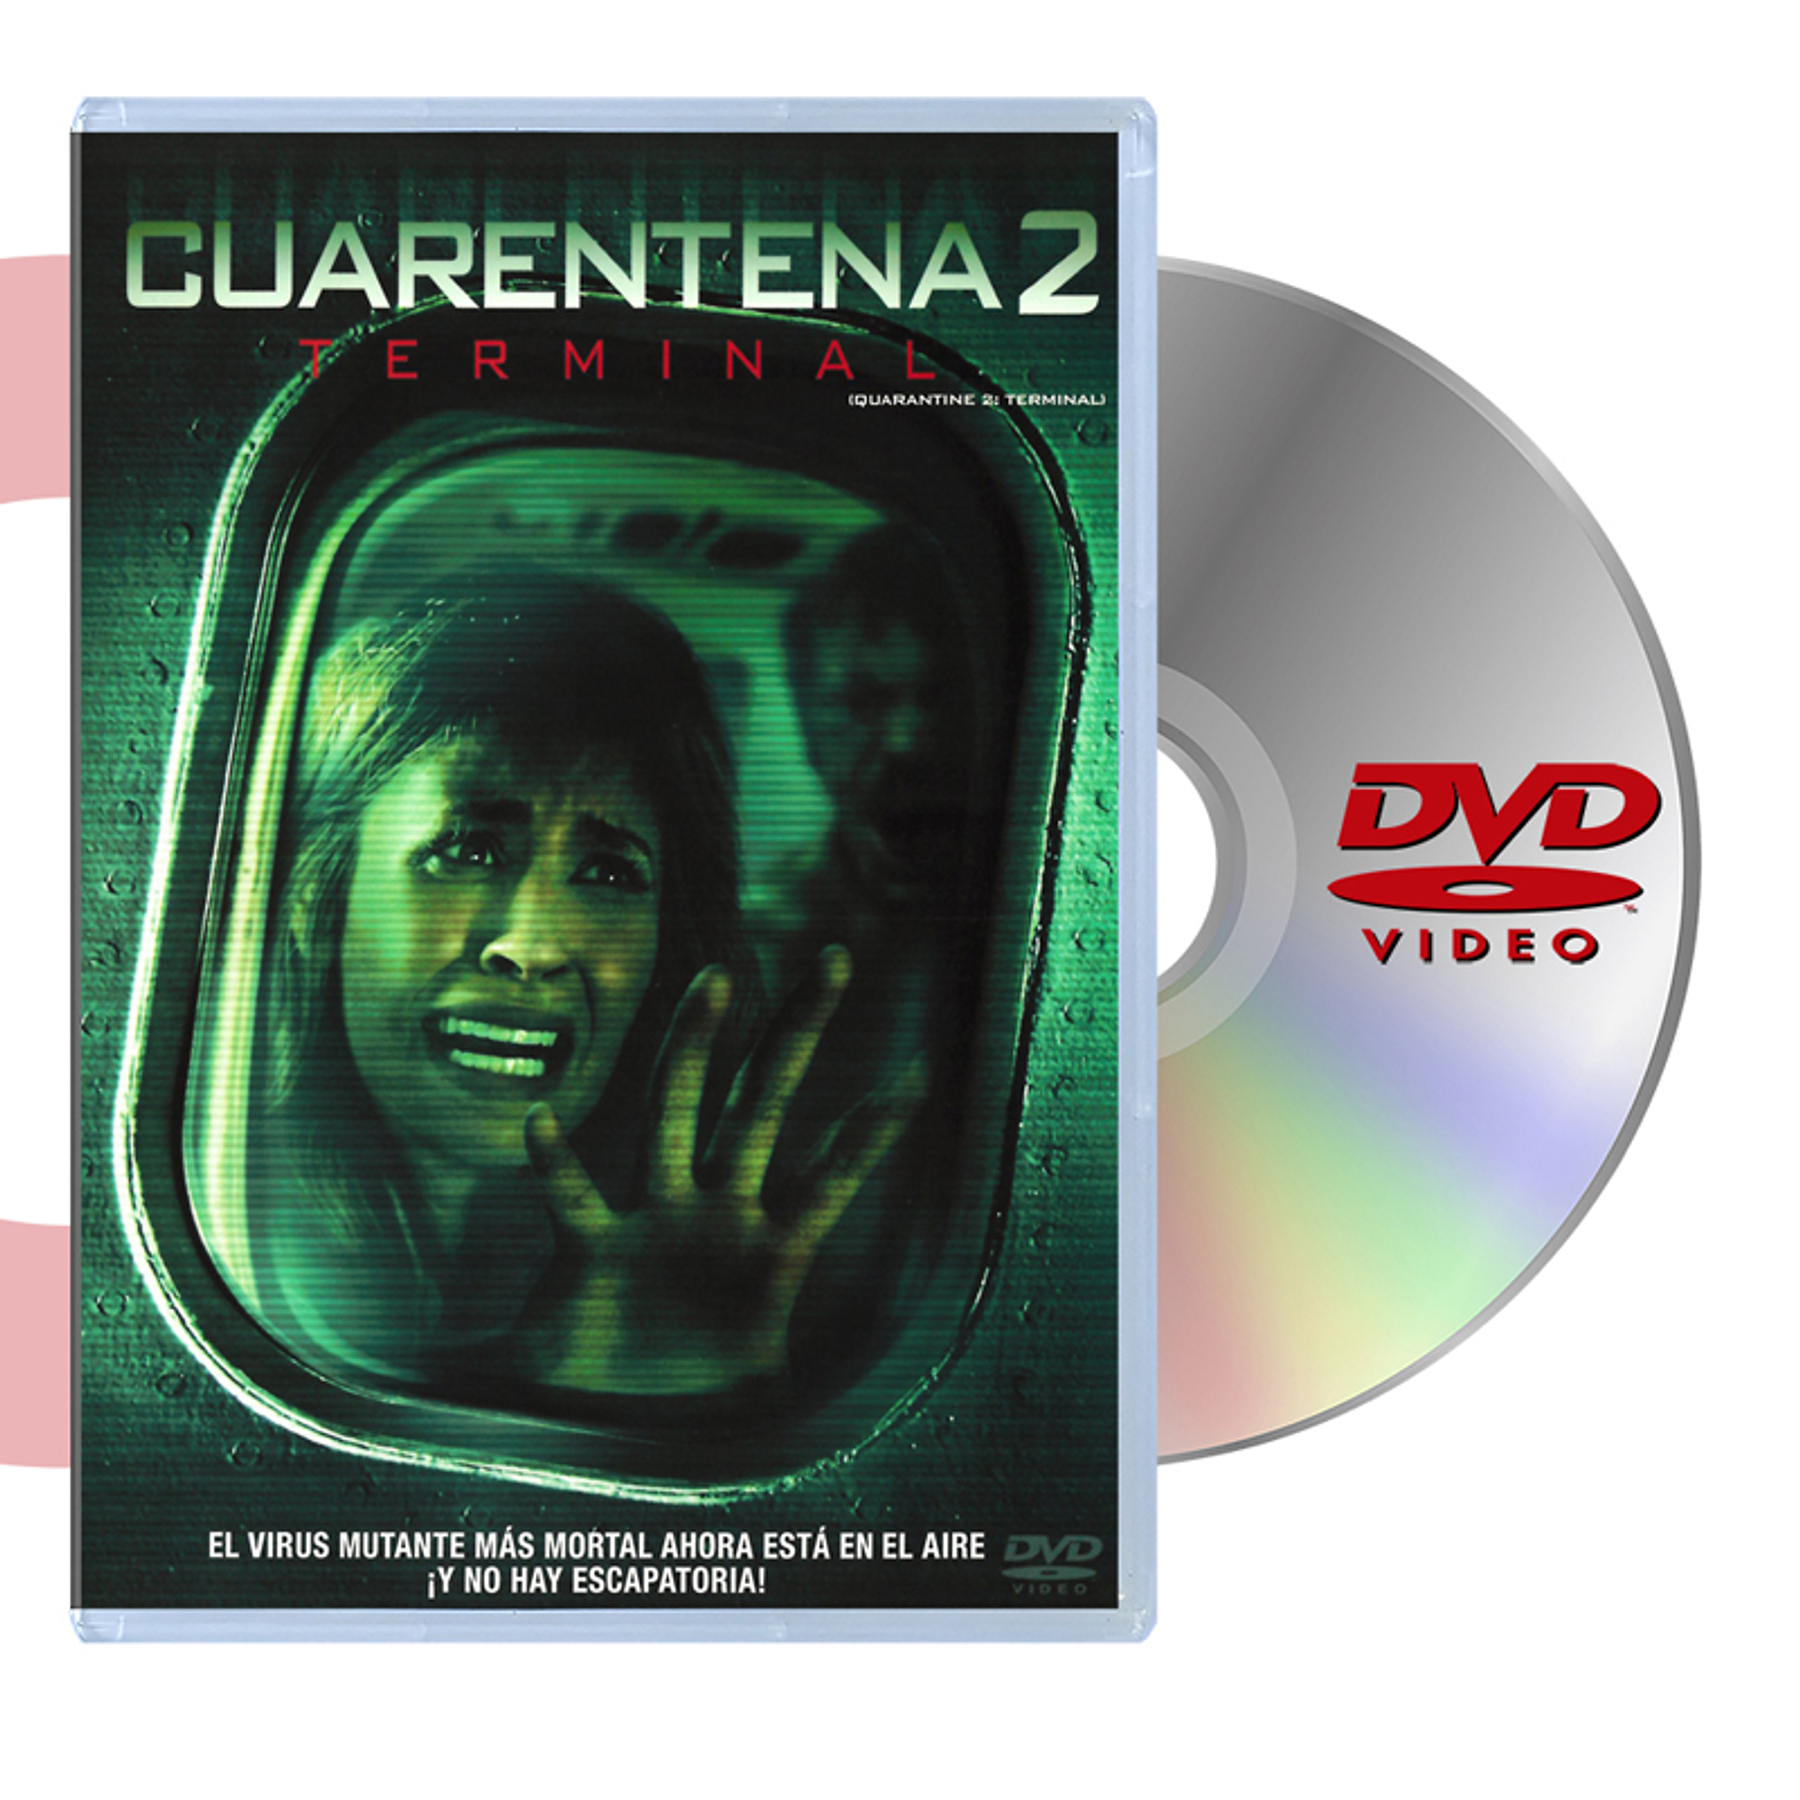 DVD CUARENTENA 2